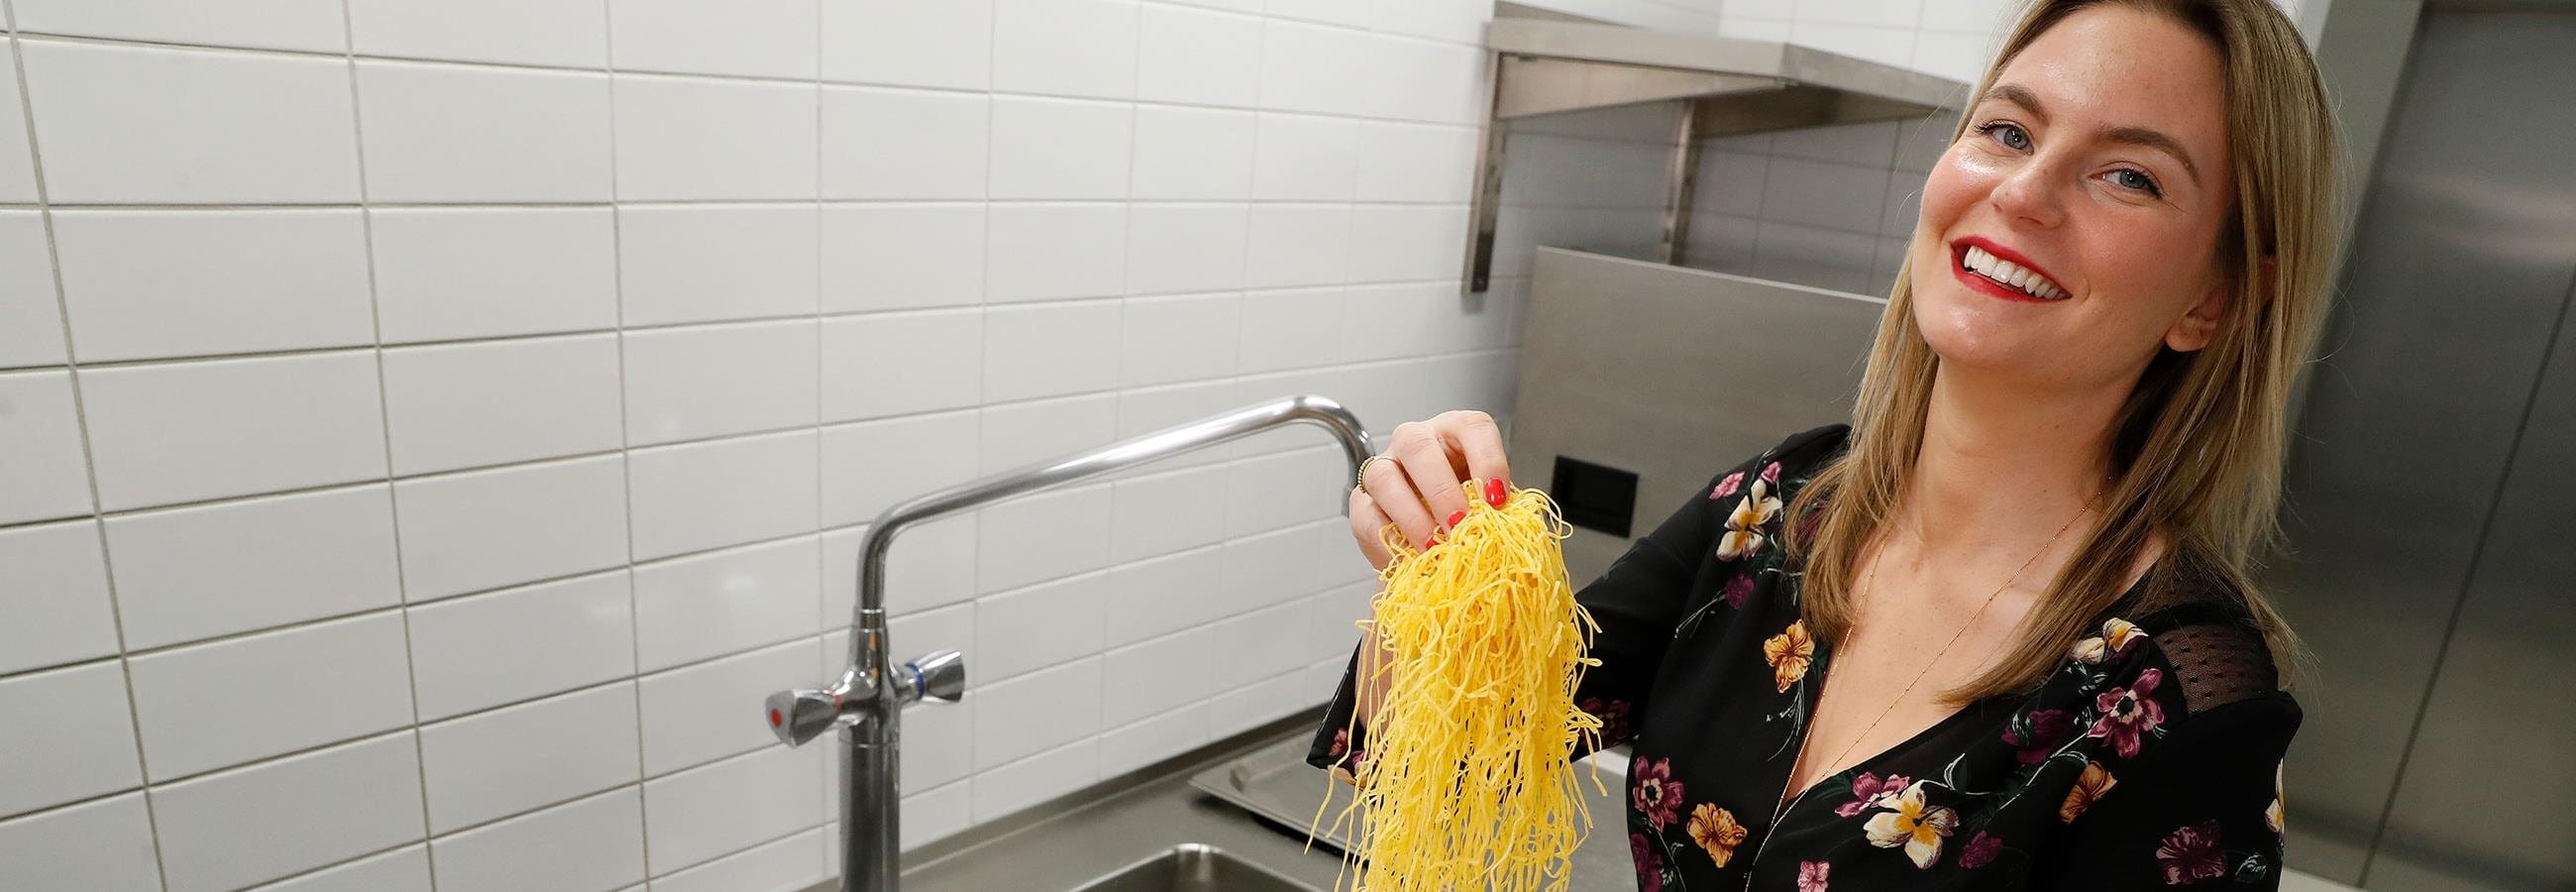 Foodbloggerin kocht Spaghetti